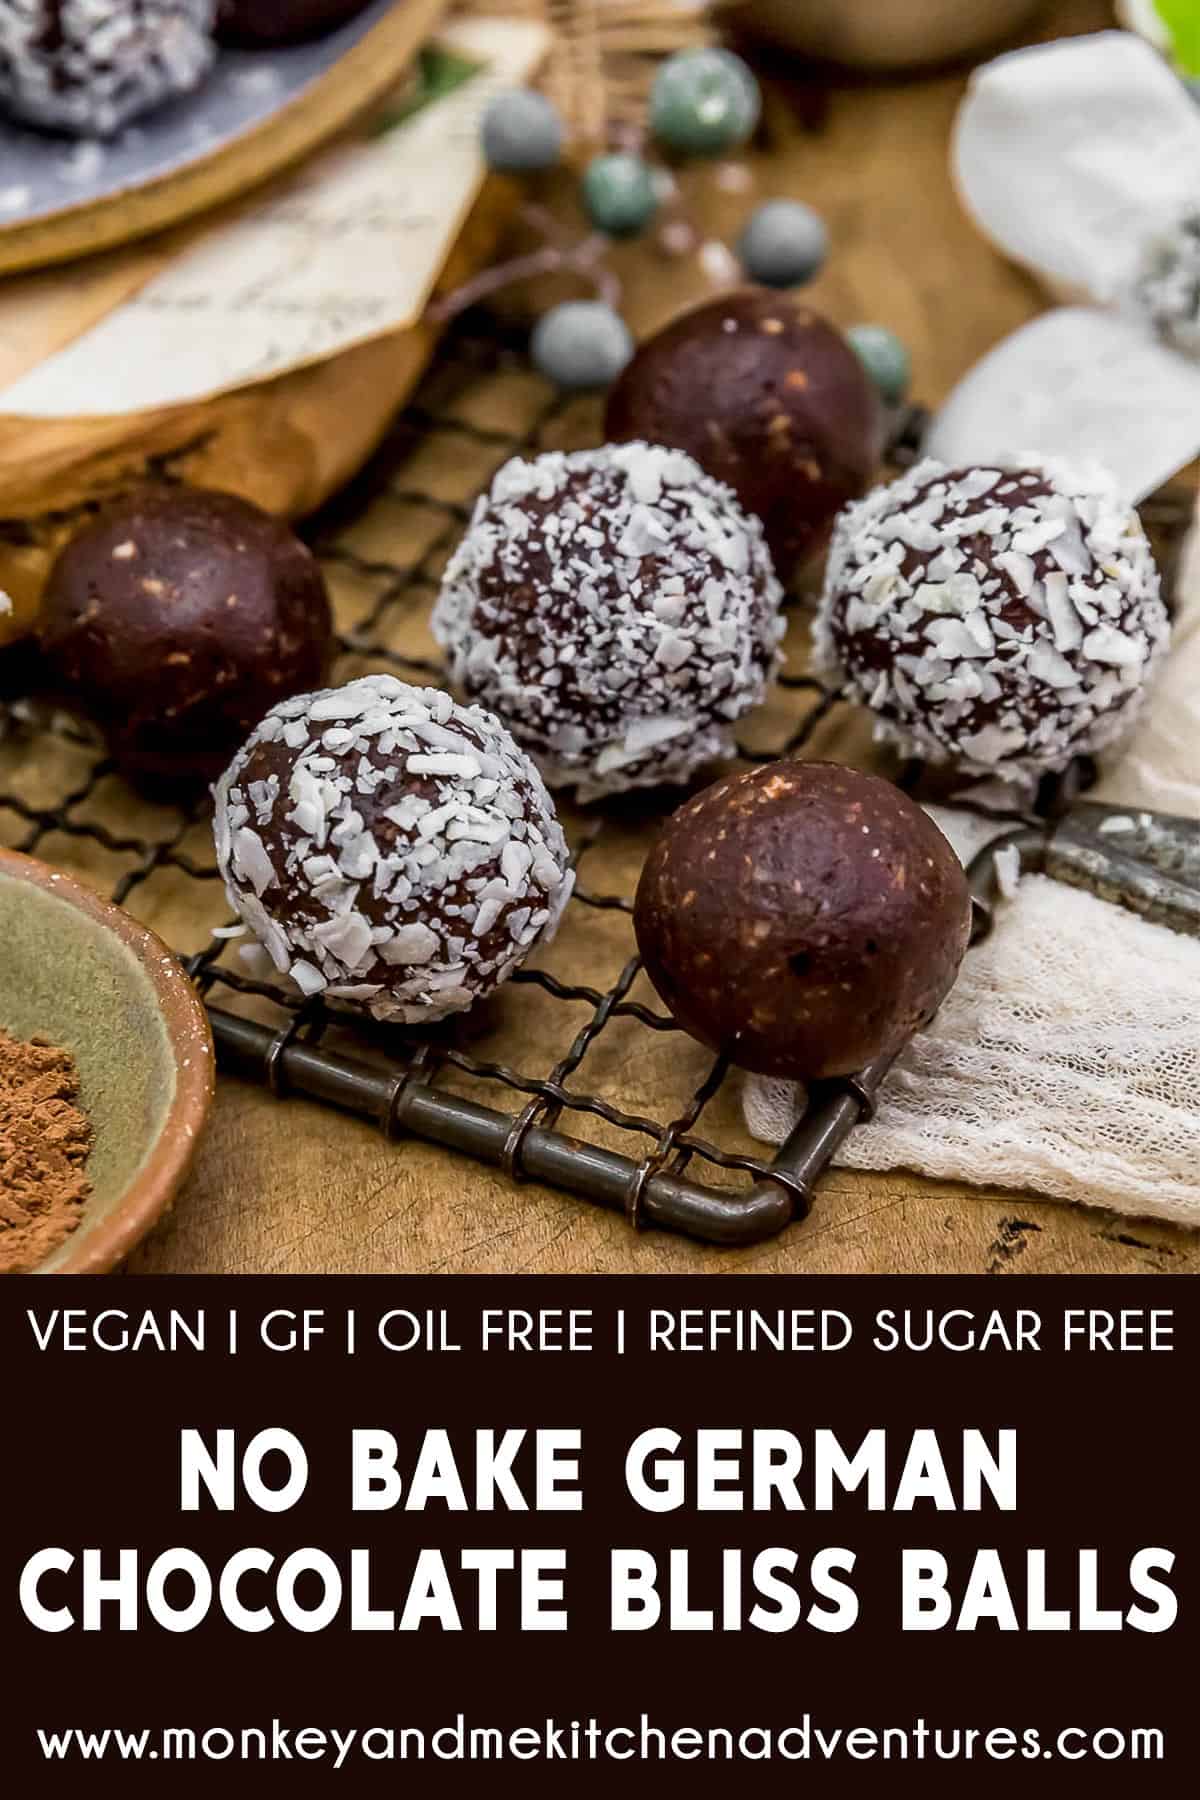 No Bake German Chocolate Bliss Balls with text description